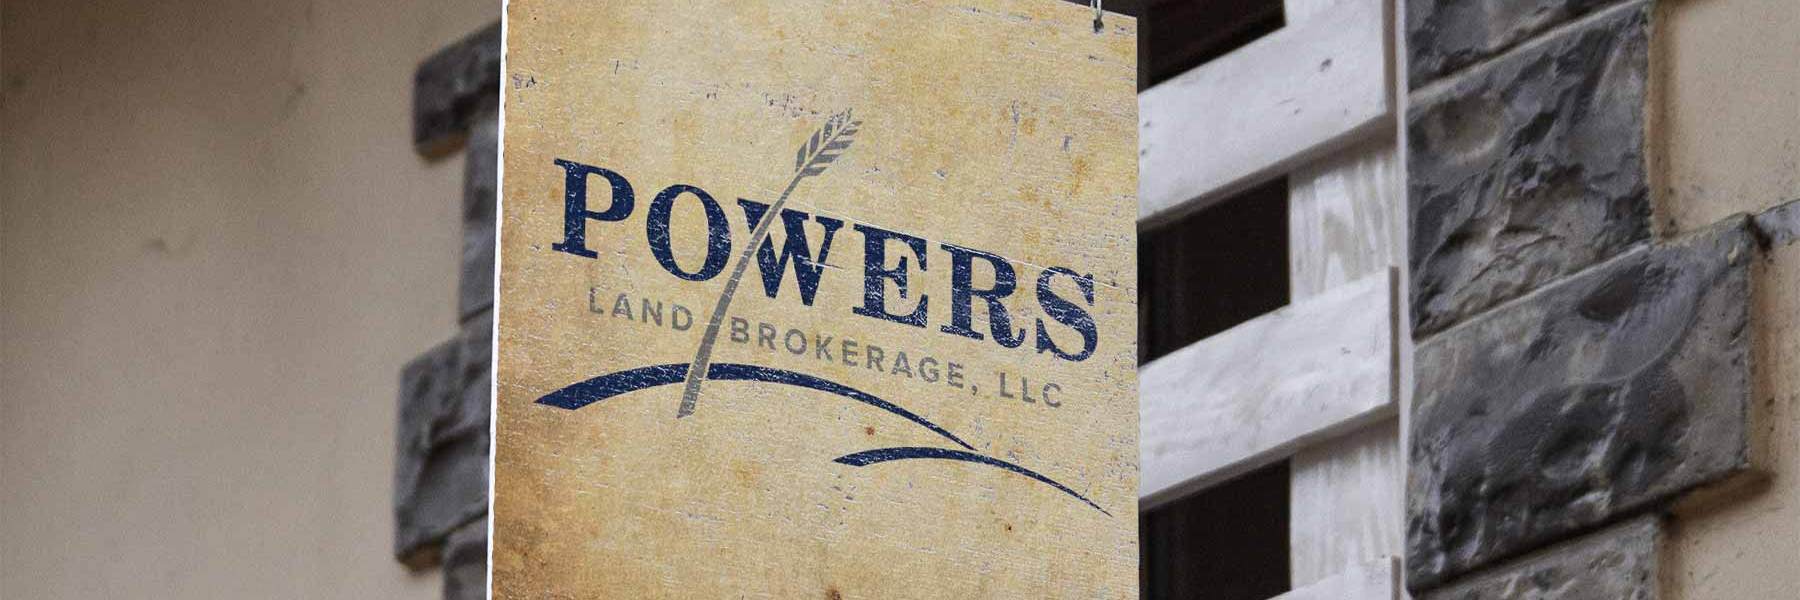 Powers Land Brokerage signage